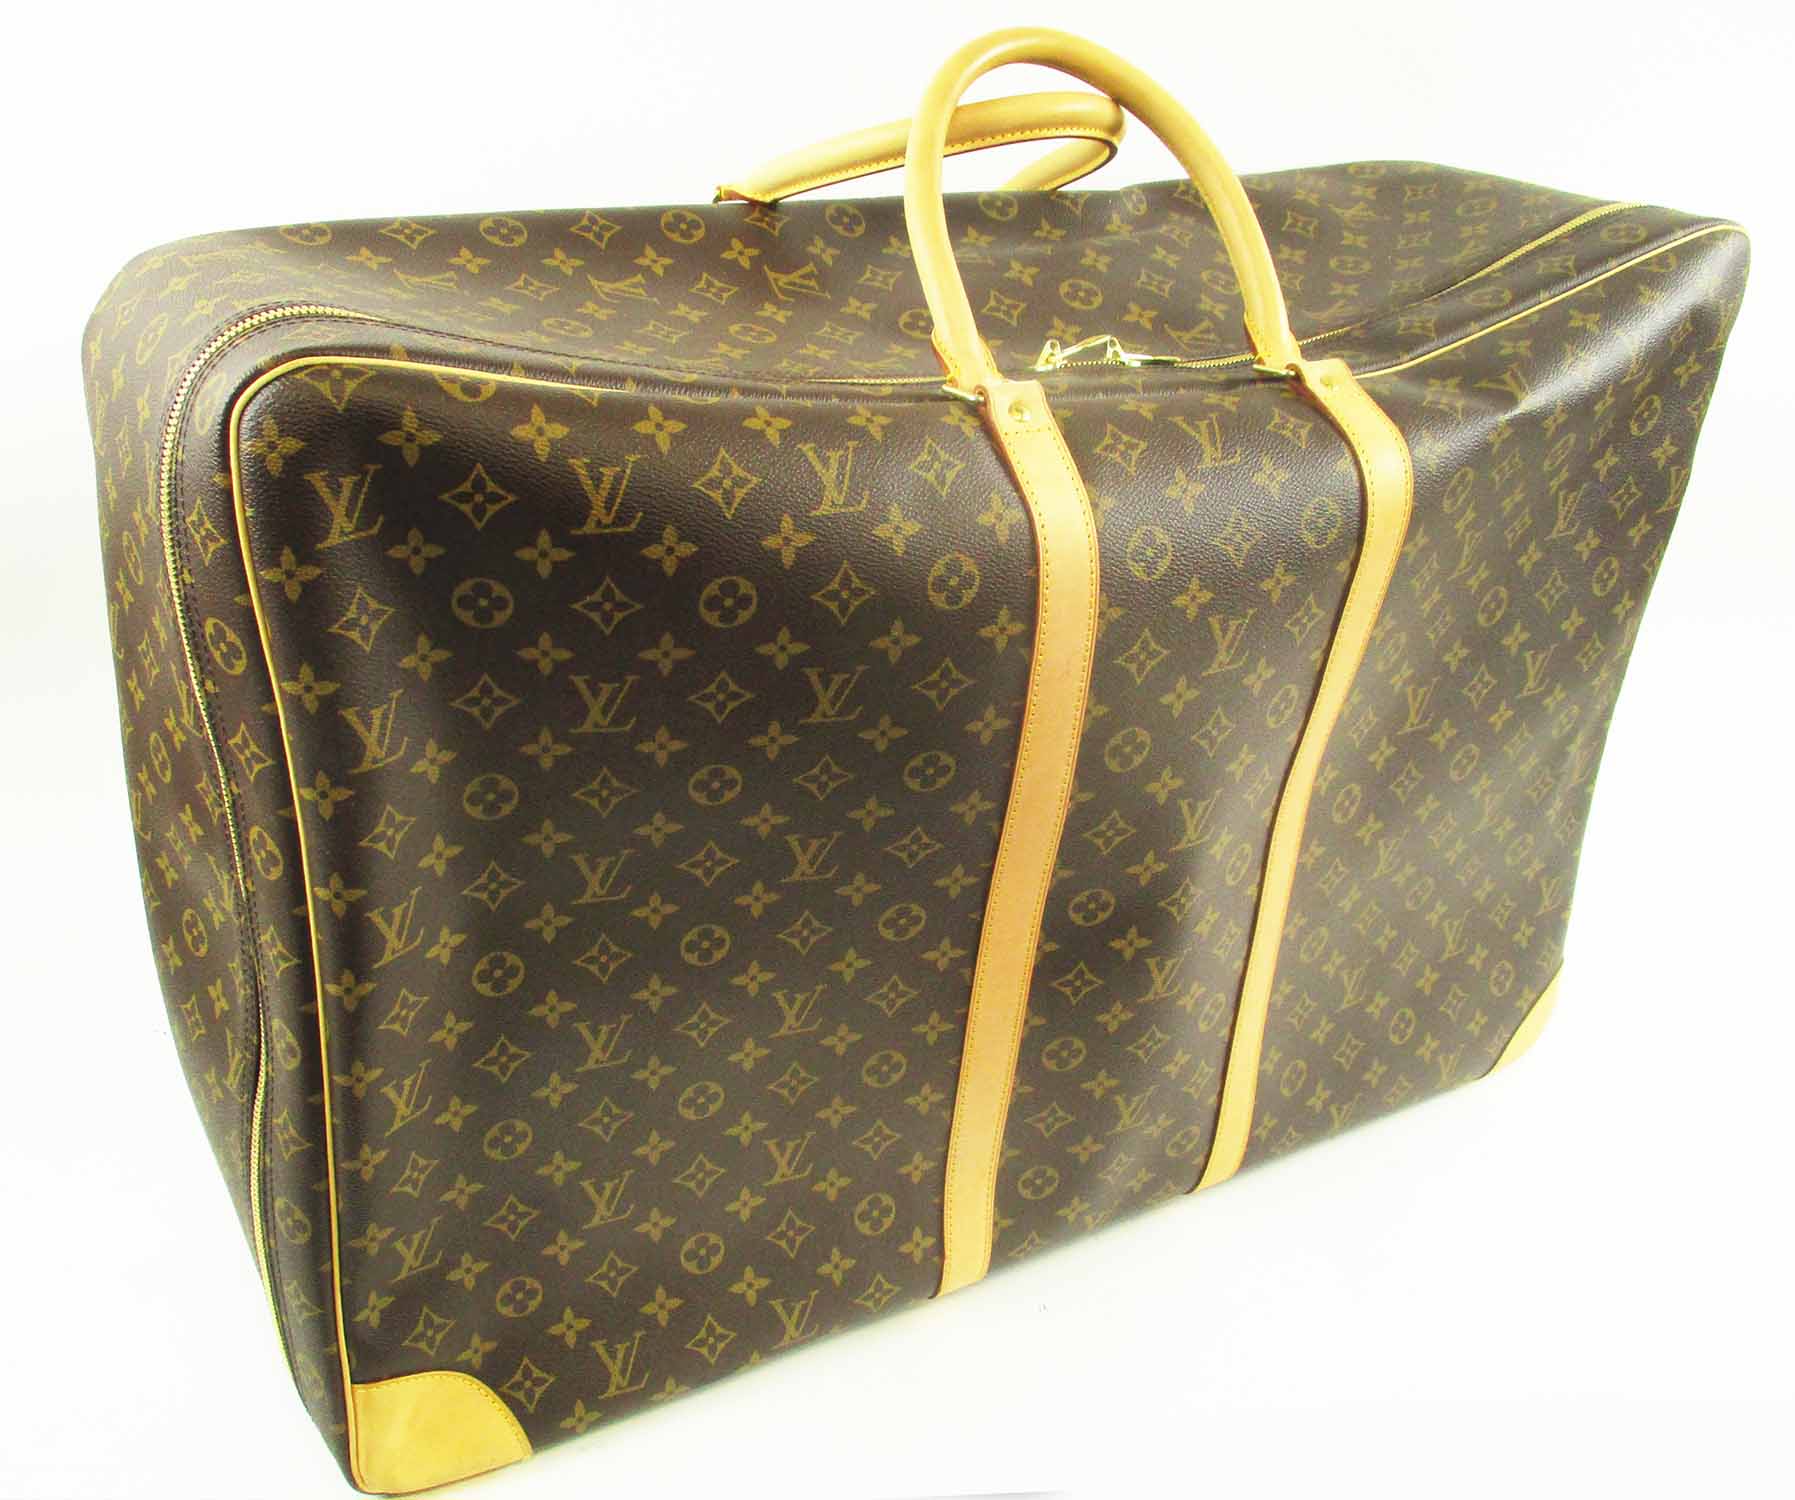 Louis Vuitton Monogram Sirius 70 Soft Suitcase Luggage 87lk513s